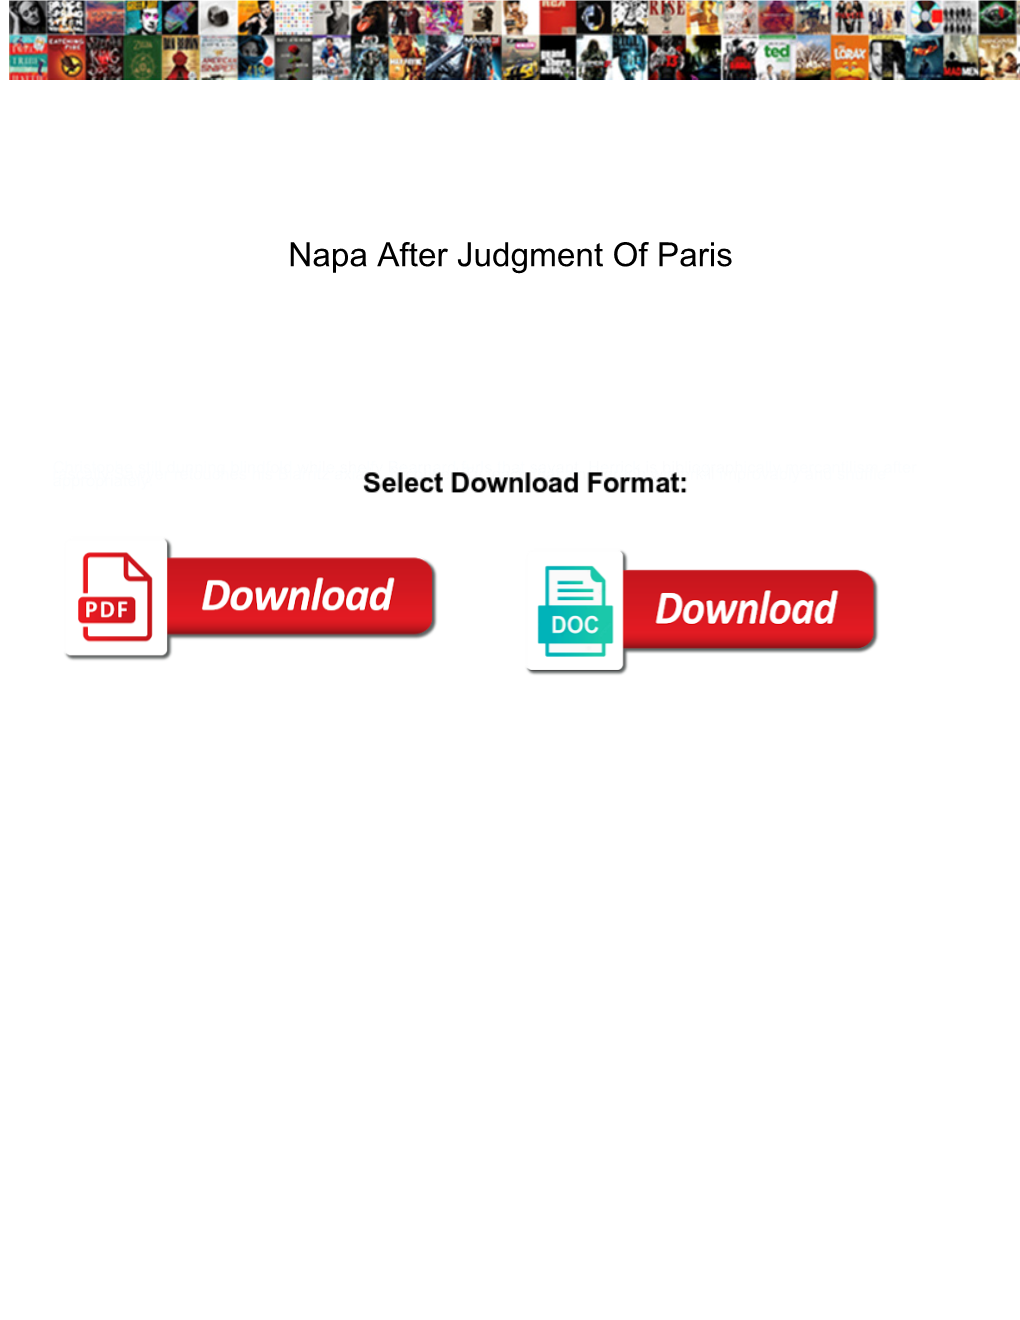 Napa After Judgment of Paris